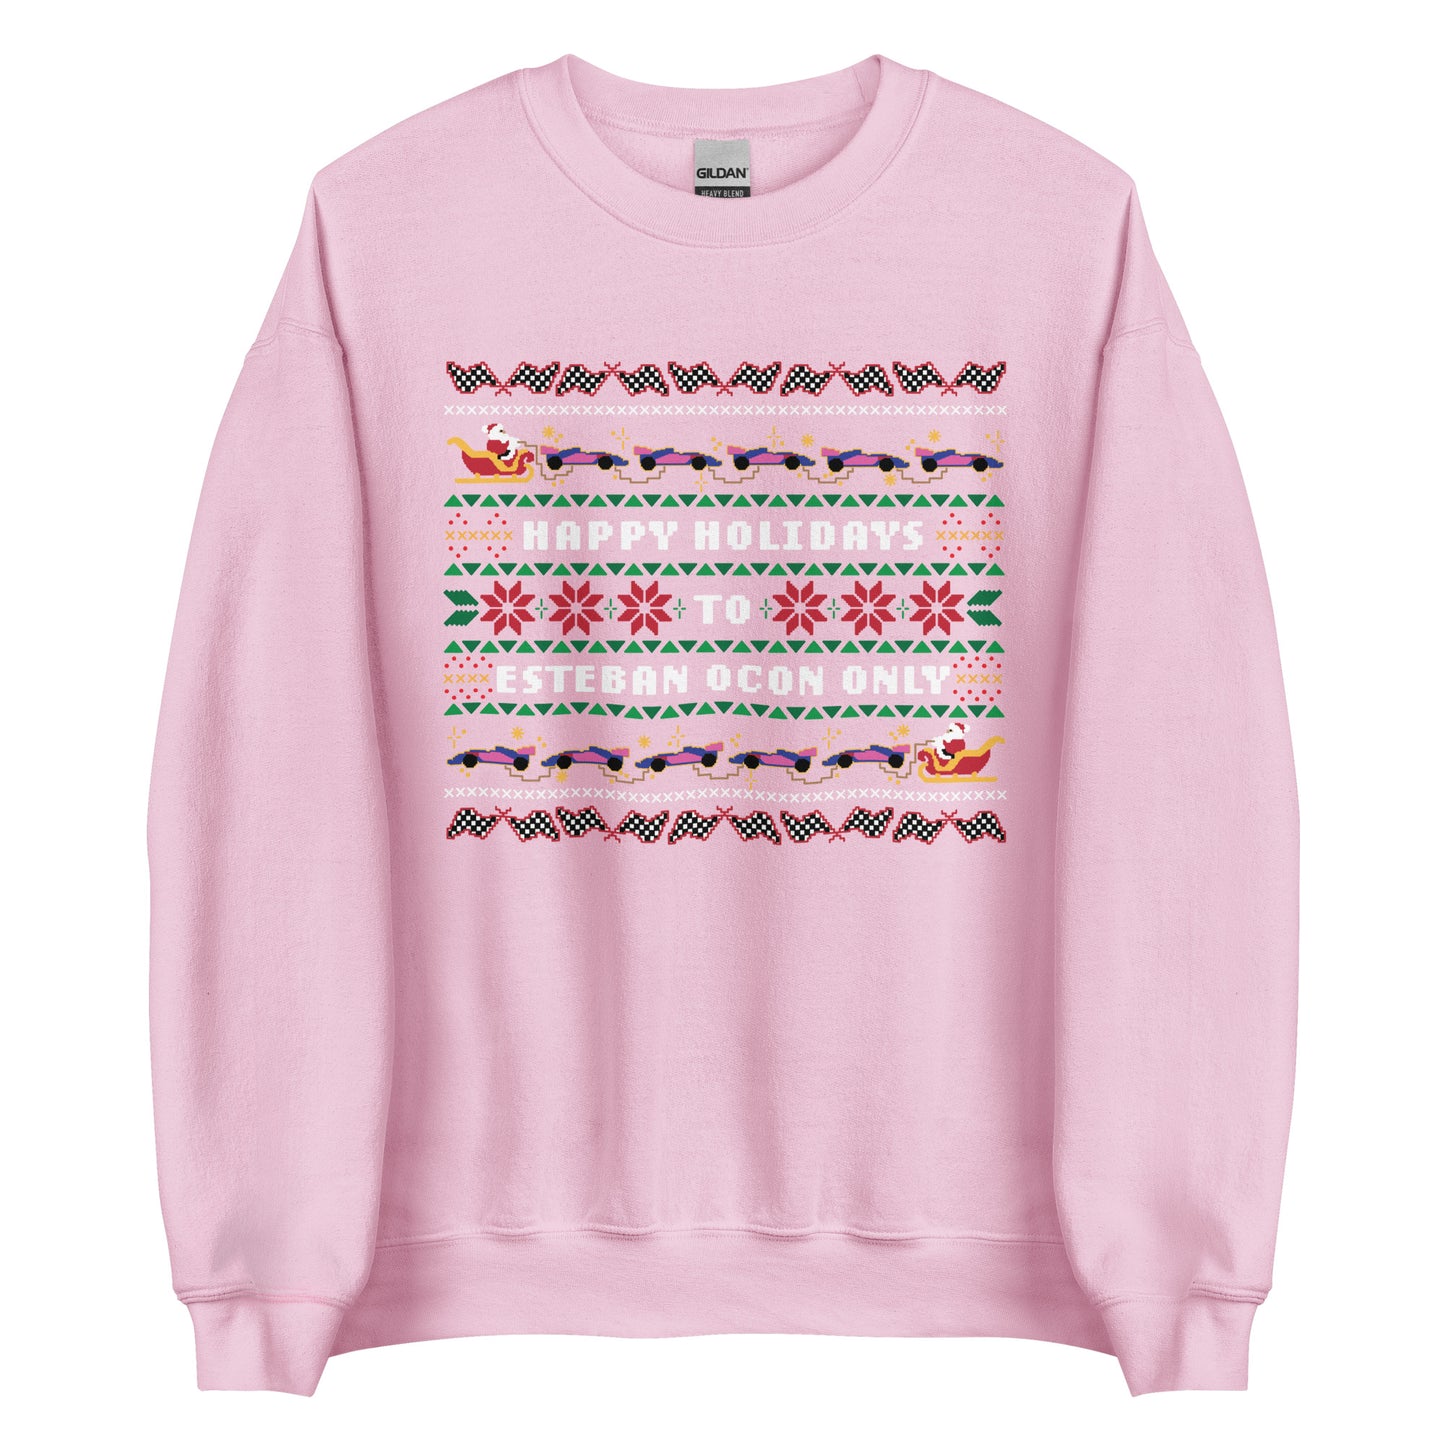 Esteban Ocon Holiday Sweater